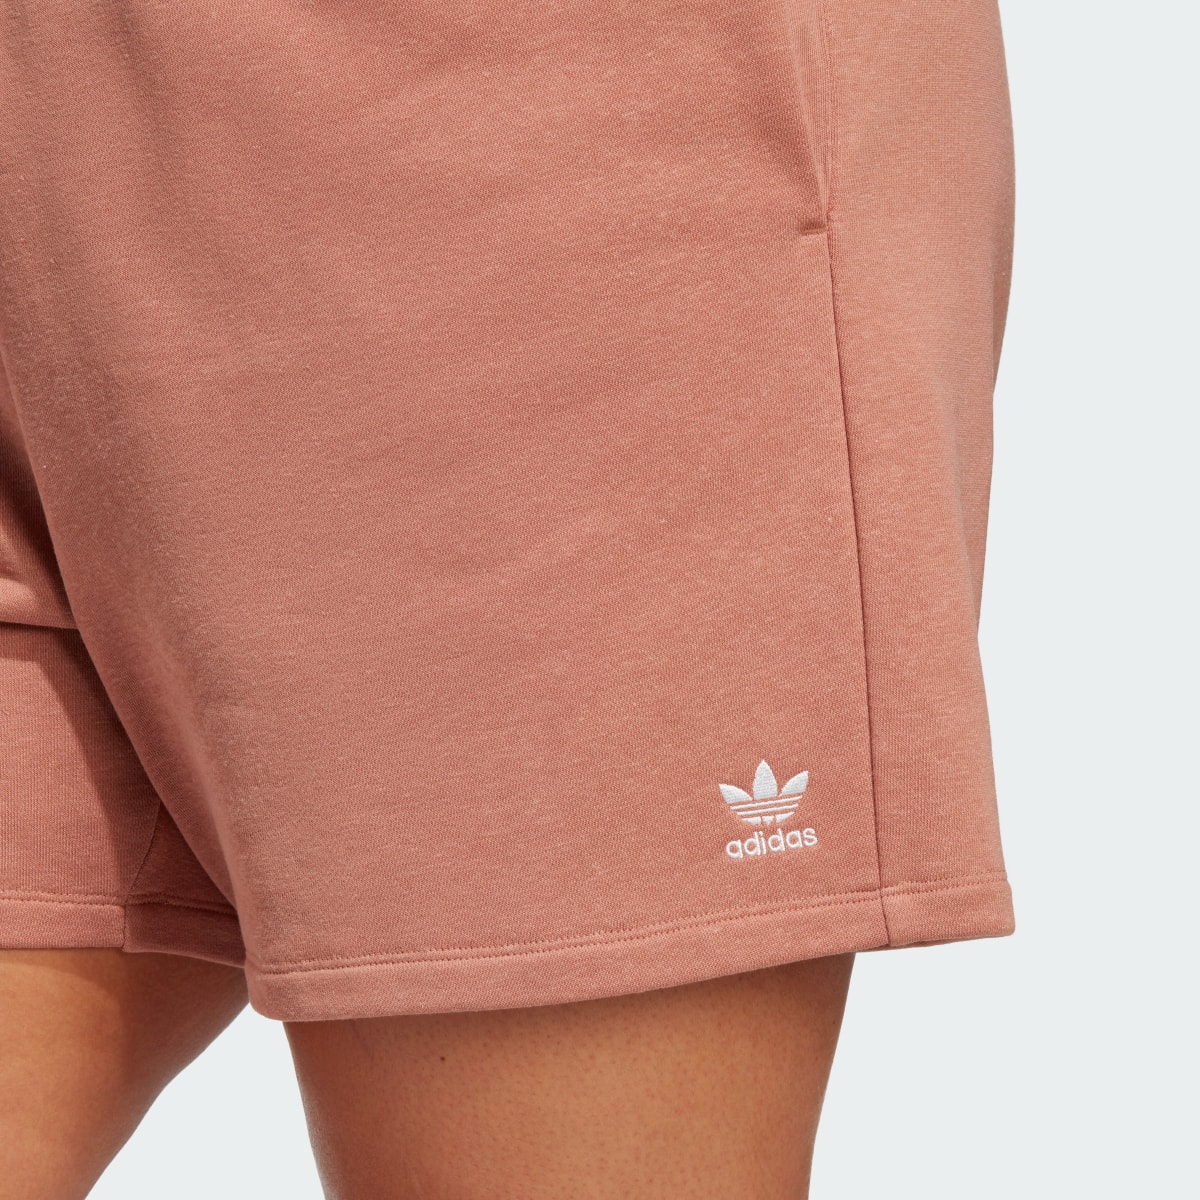 Adidas Essentials+ Made with Hemp Shorts (Plus Size). 5